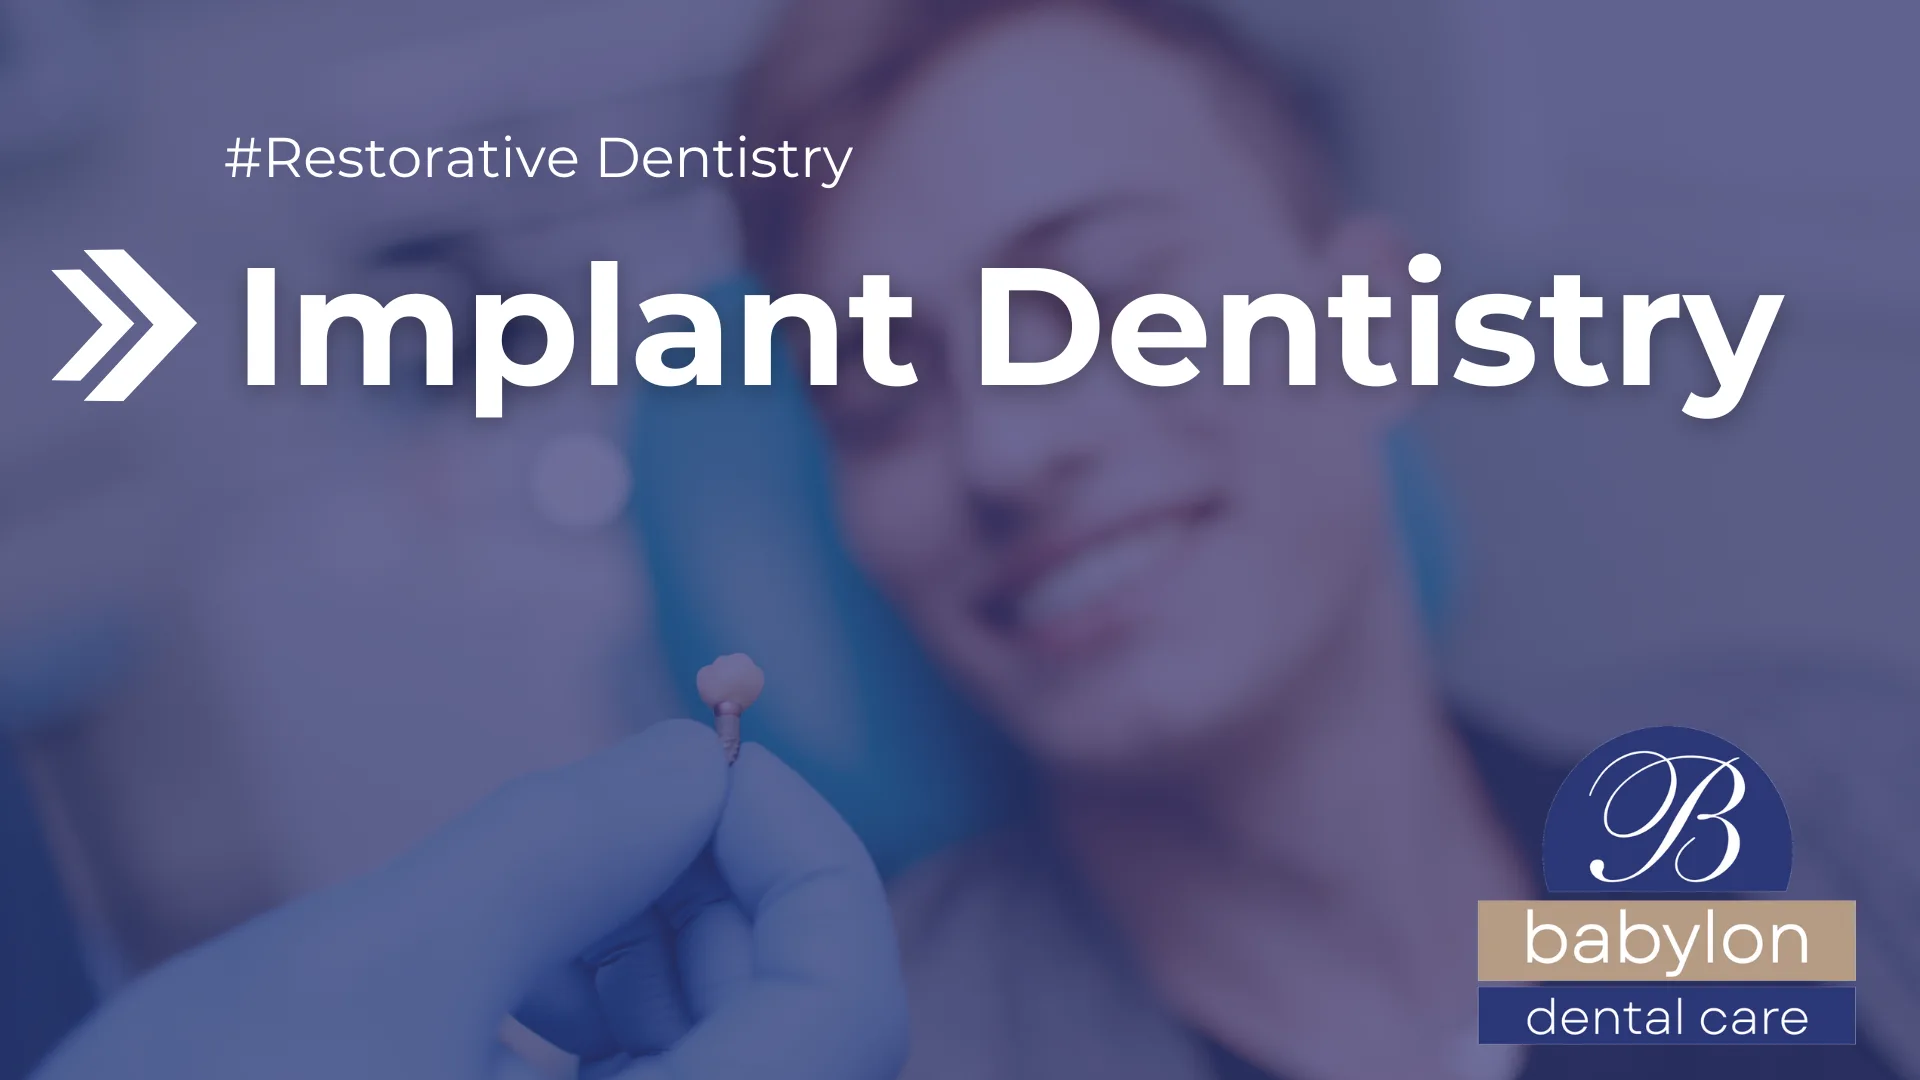 Implant Dentistry Image - new logo